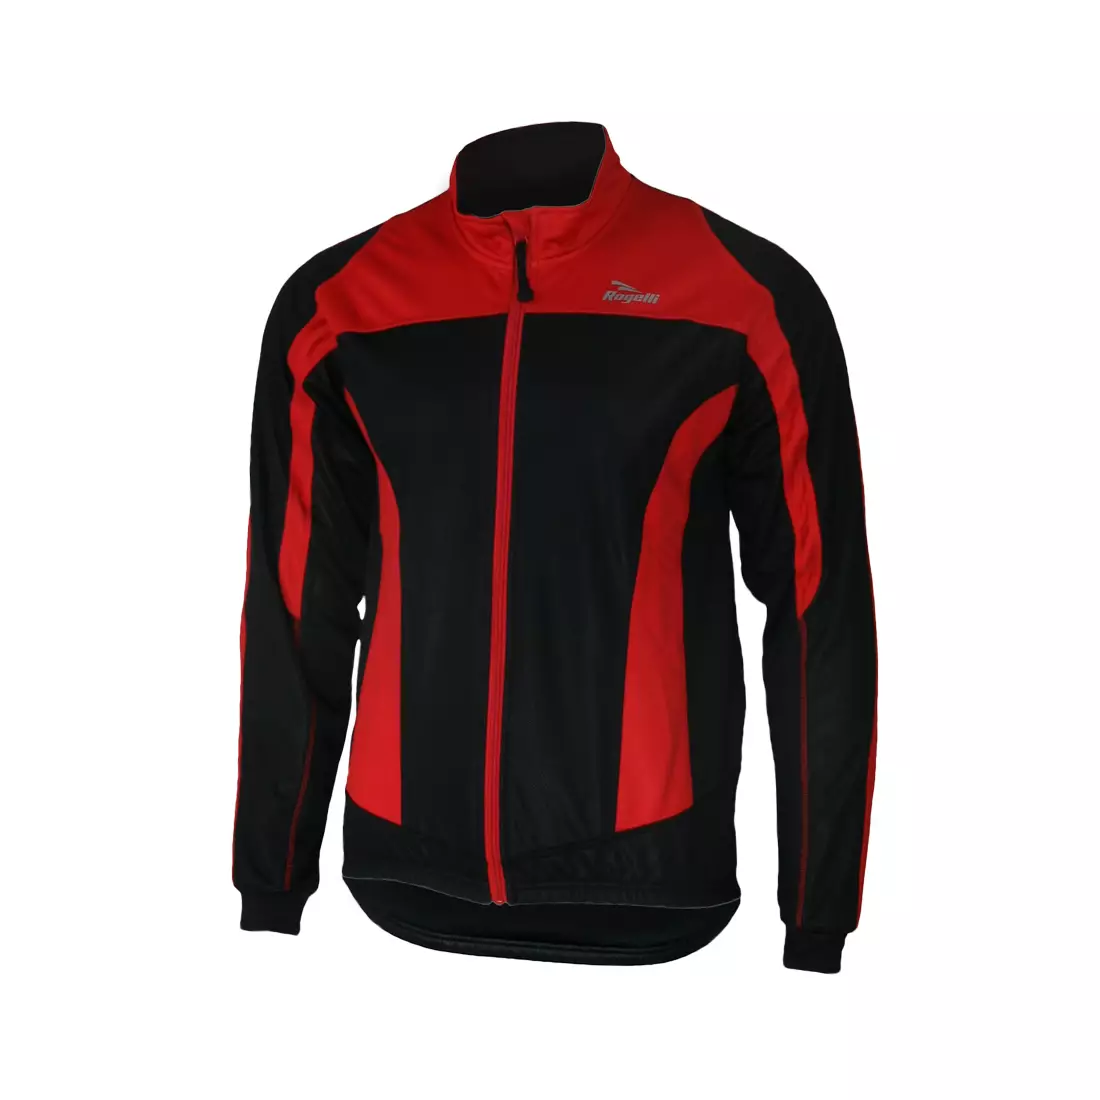 ROGELLI UZZANO - membránová cyklistická bunda, černo-červená